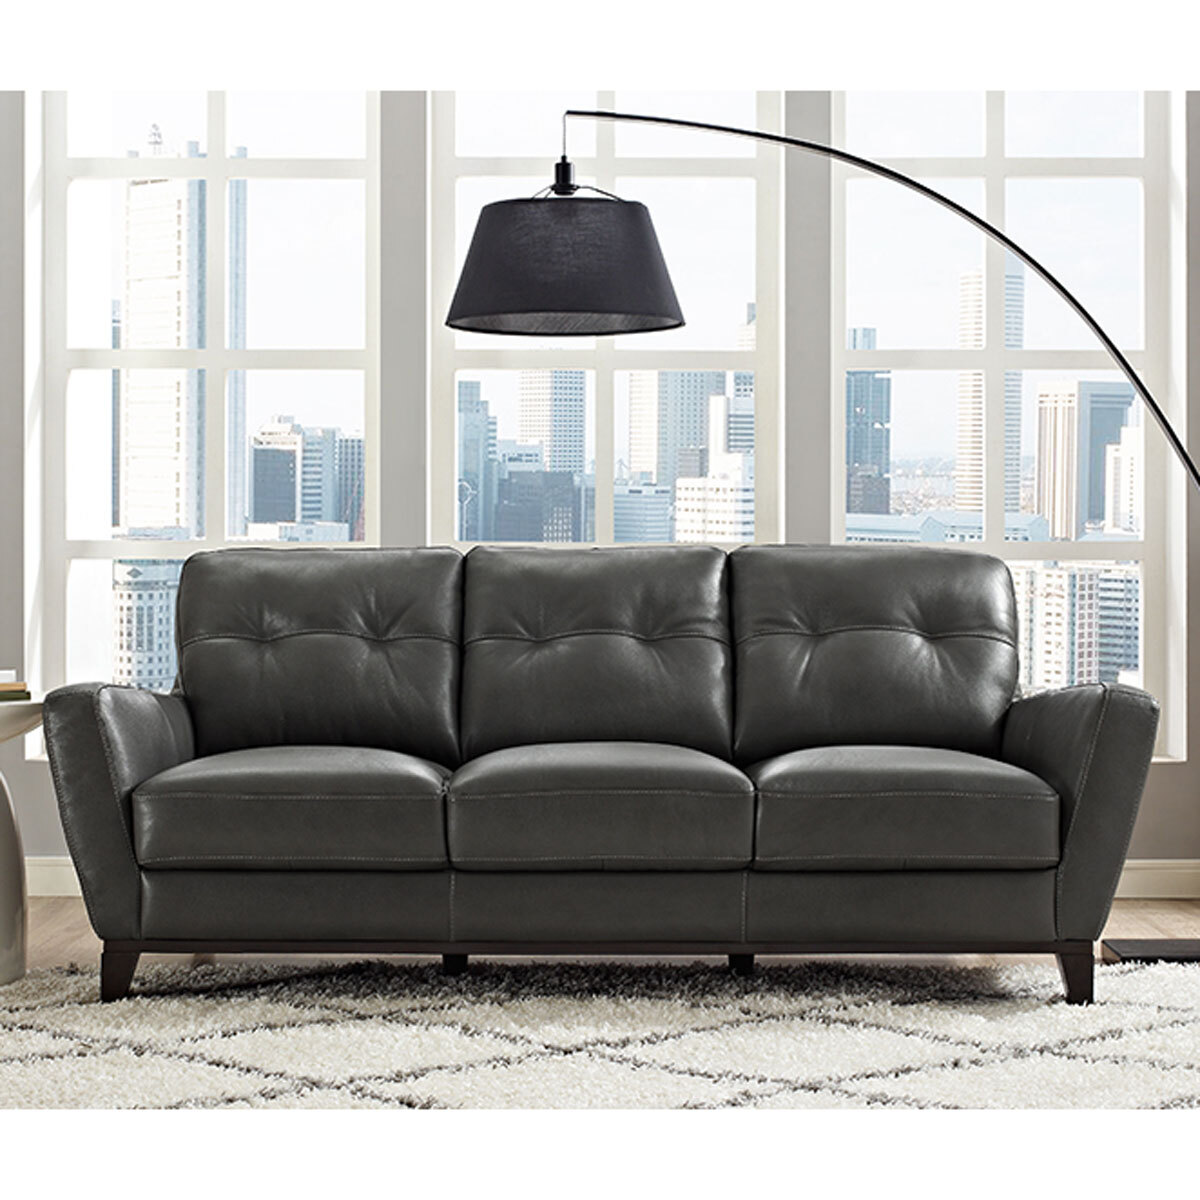 Grey Leather 3 Seater Sofa Costco Uk, Are Natuzzi Sofas Real Leather